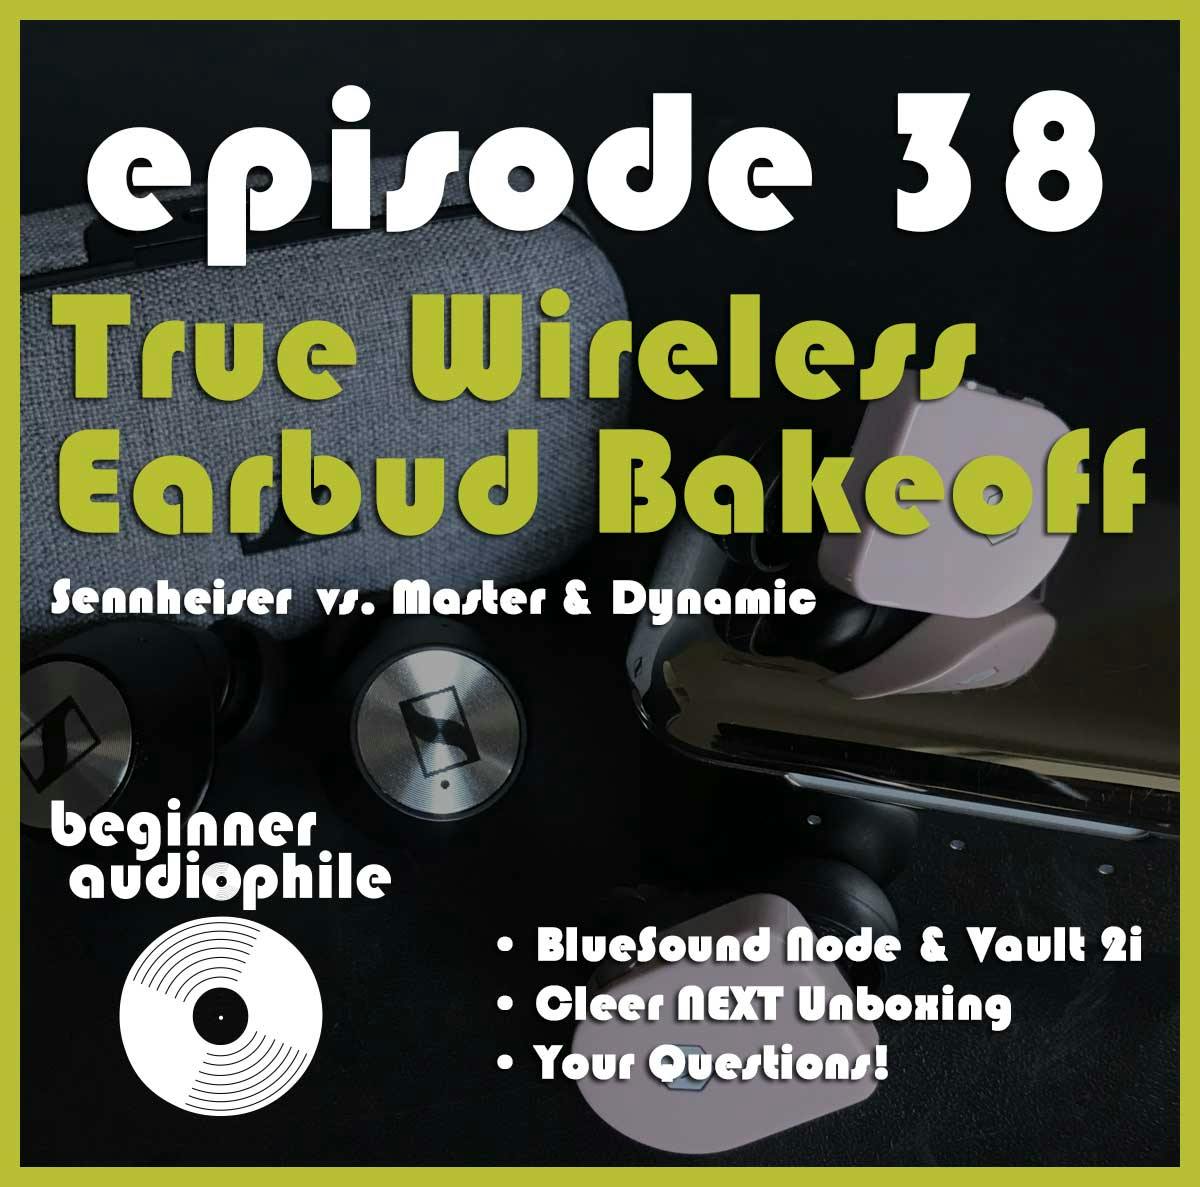 38: True Wireless Earbud Bakeoff w/Sennheiser vs. Master & Dynamic, BlueSound Gear, and Your Questions